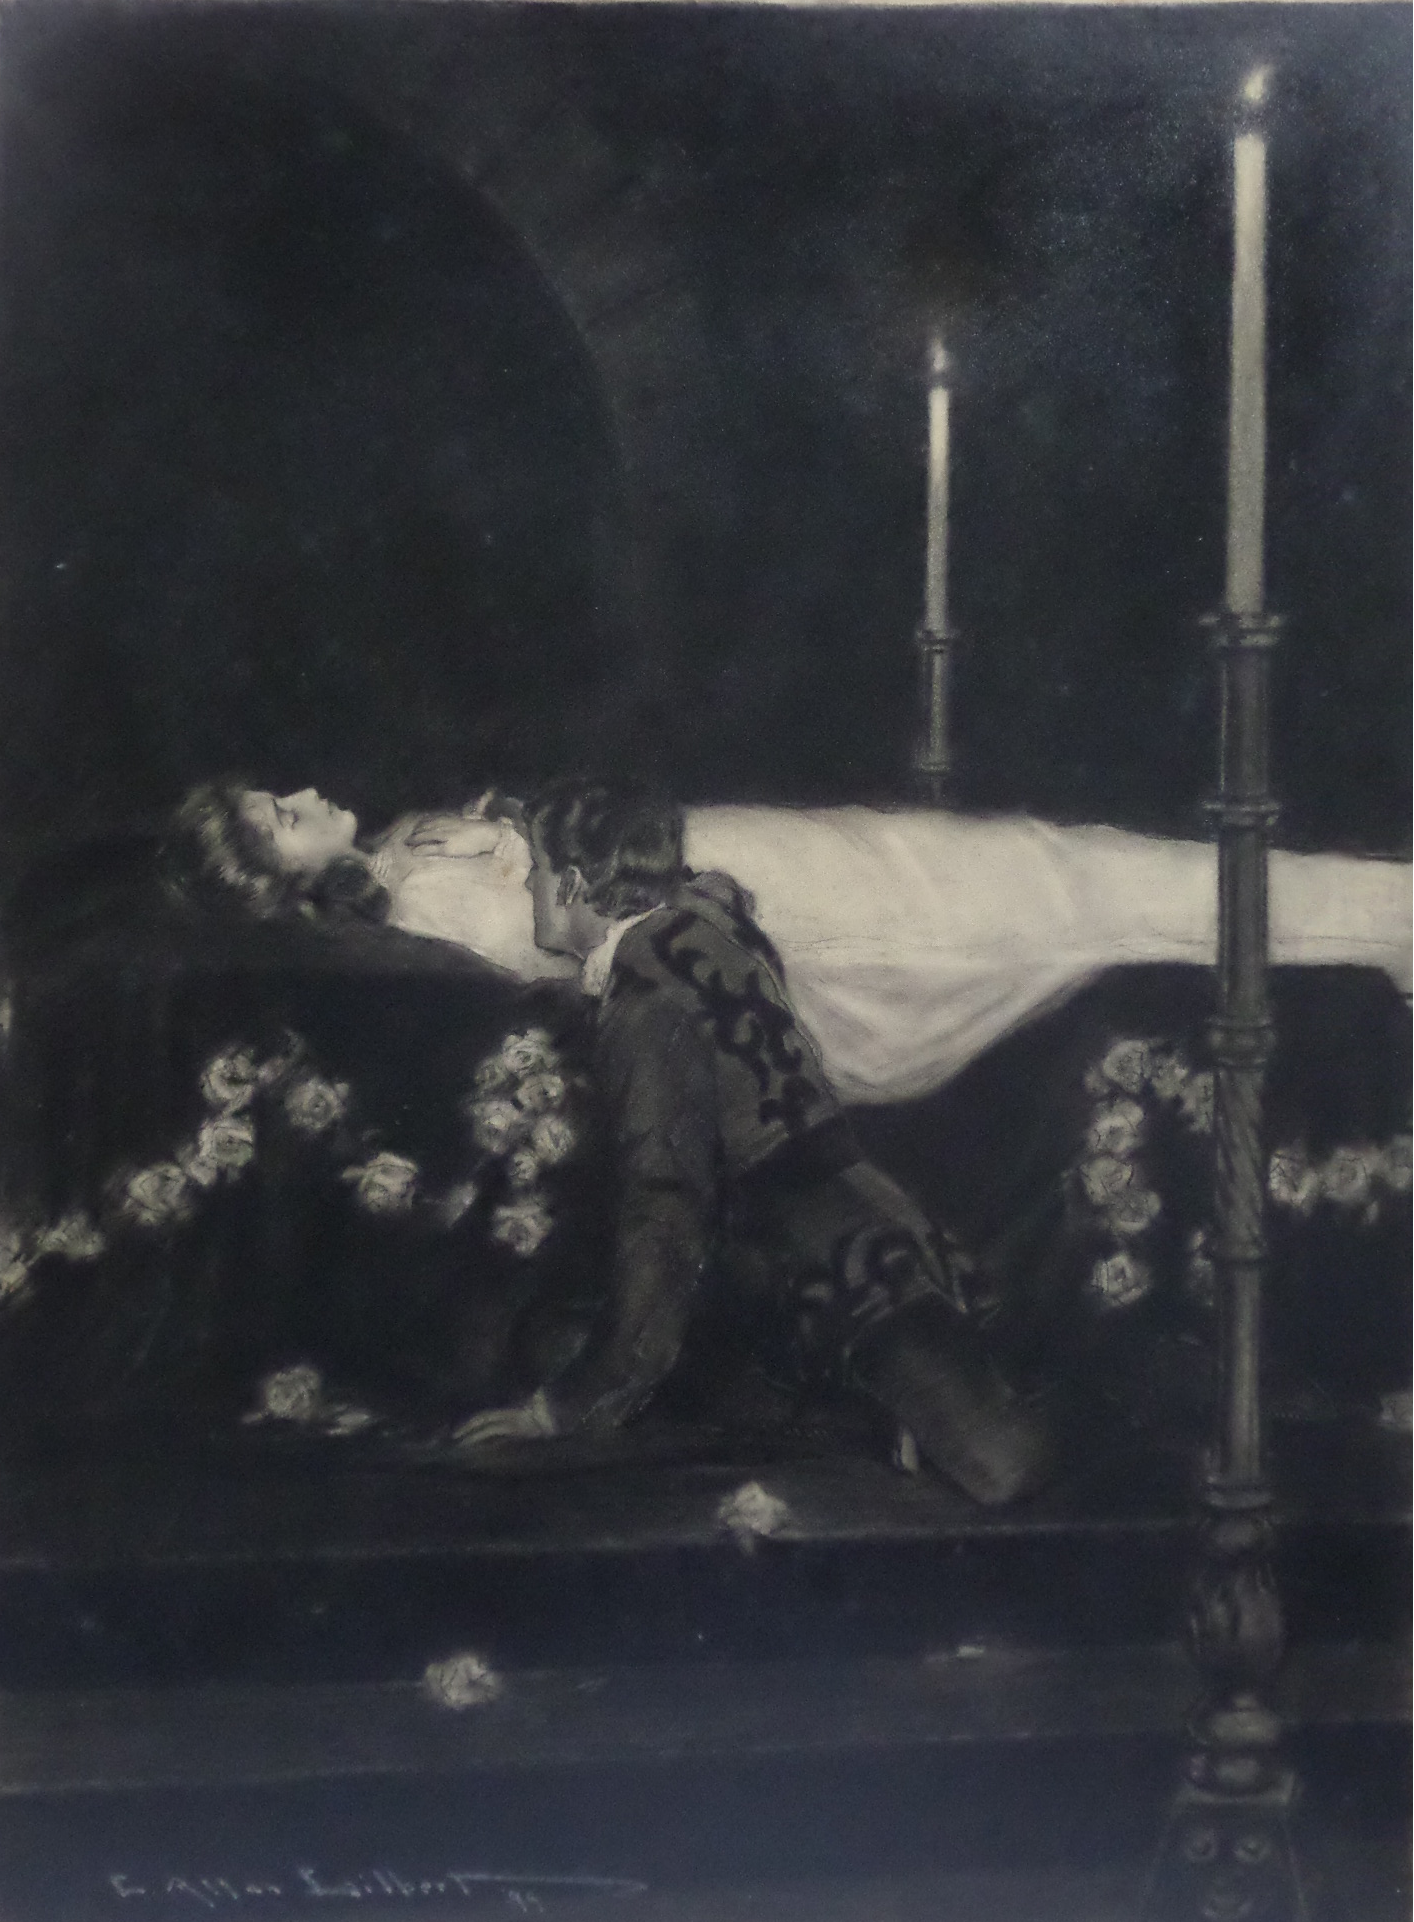 ORIGINAL DRAWING / ARTWORK BY CHARLES ALLEN GILBERT 1899, SHAKESPEARE'S ROMEO & JULIET